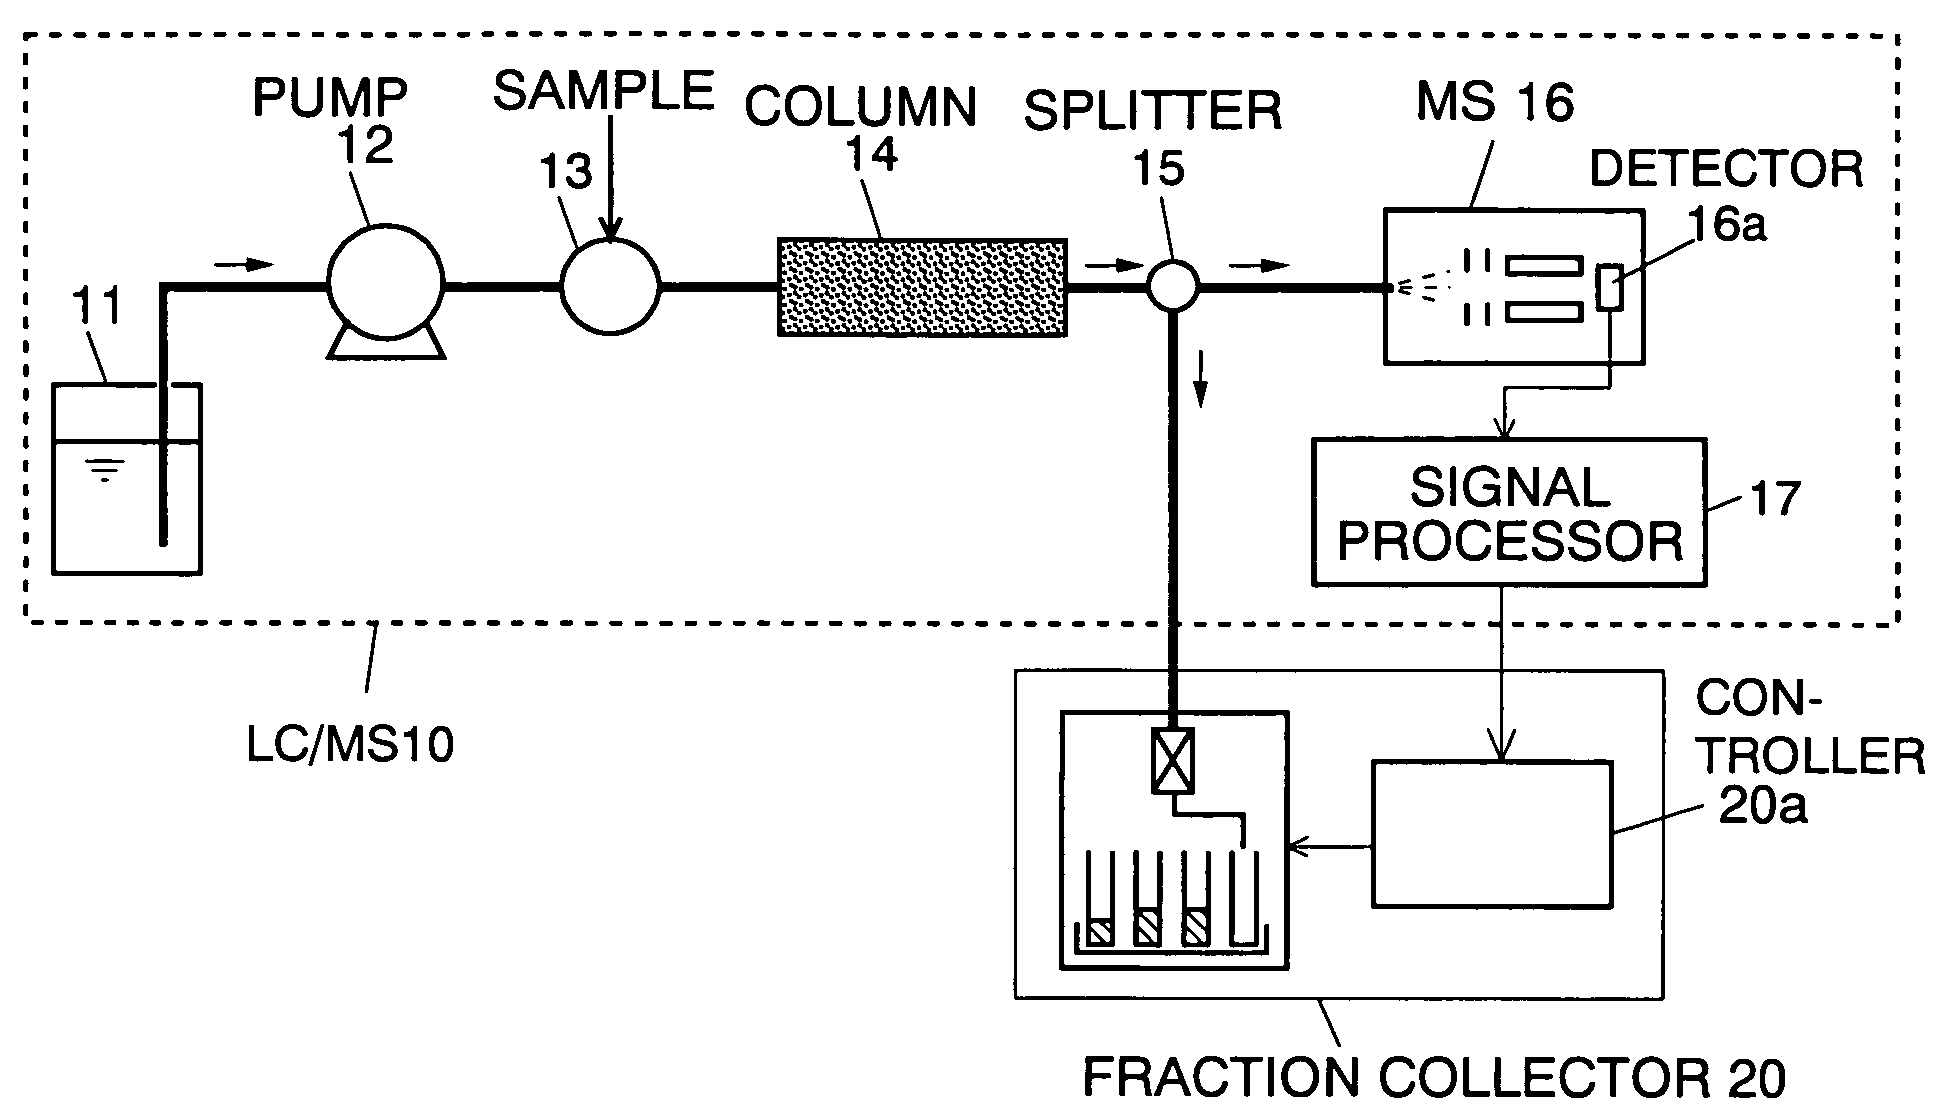 Chromatograph/mass spectrometer